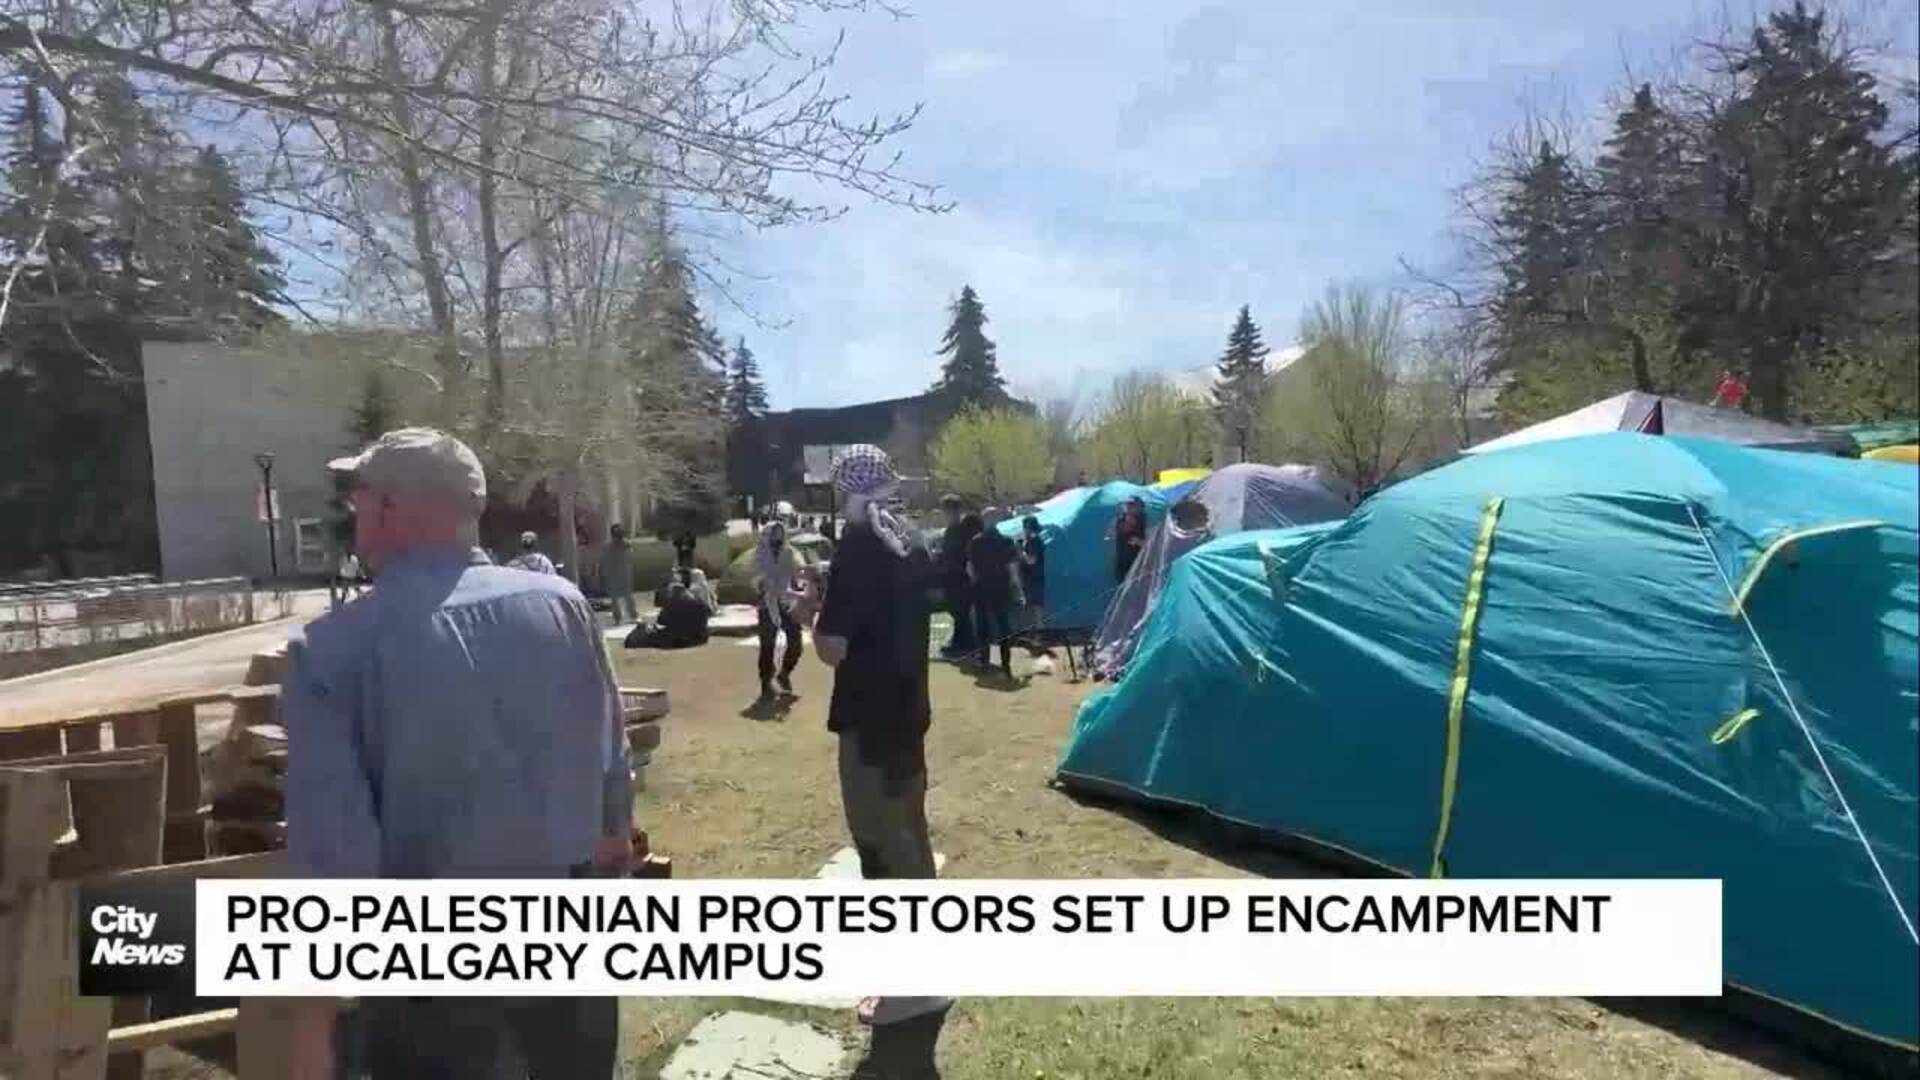 Pro-Palestinian protestors set up encampment at UCalgary campus